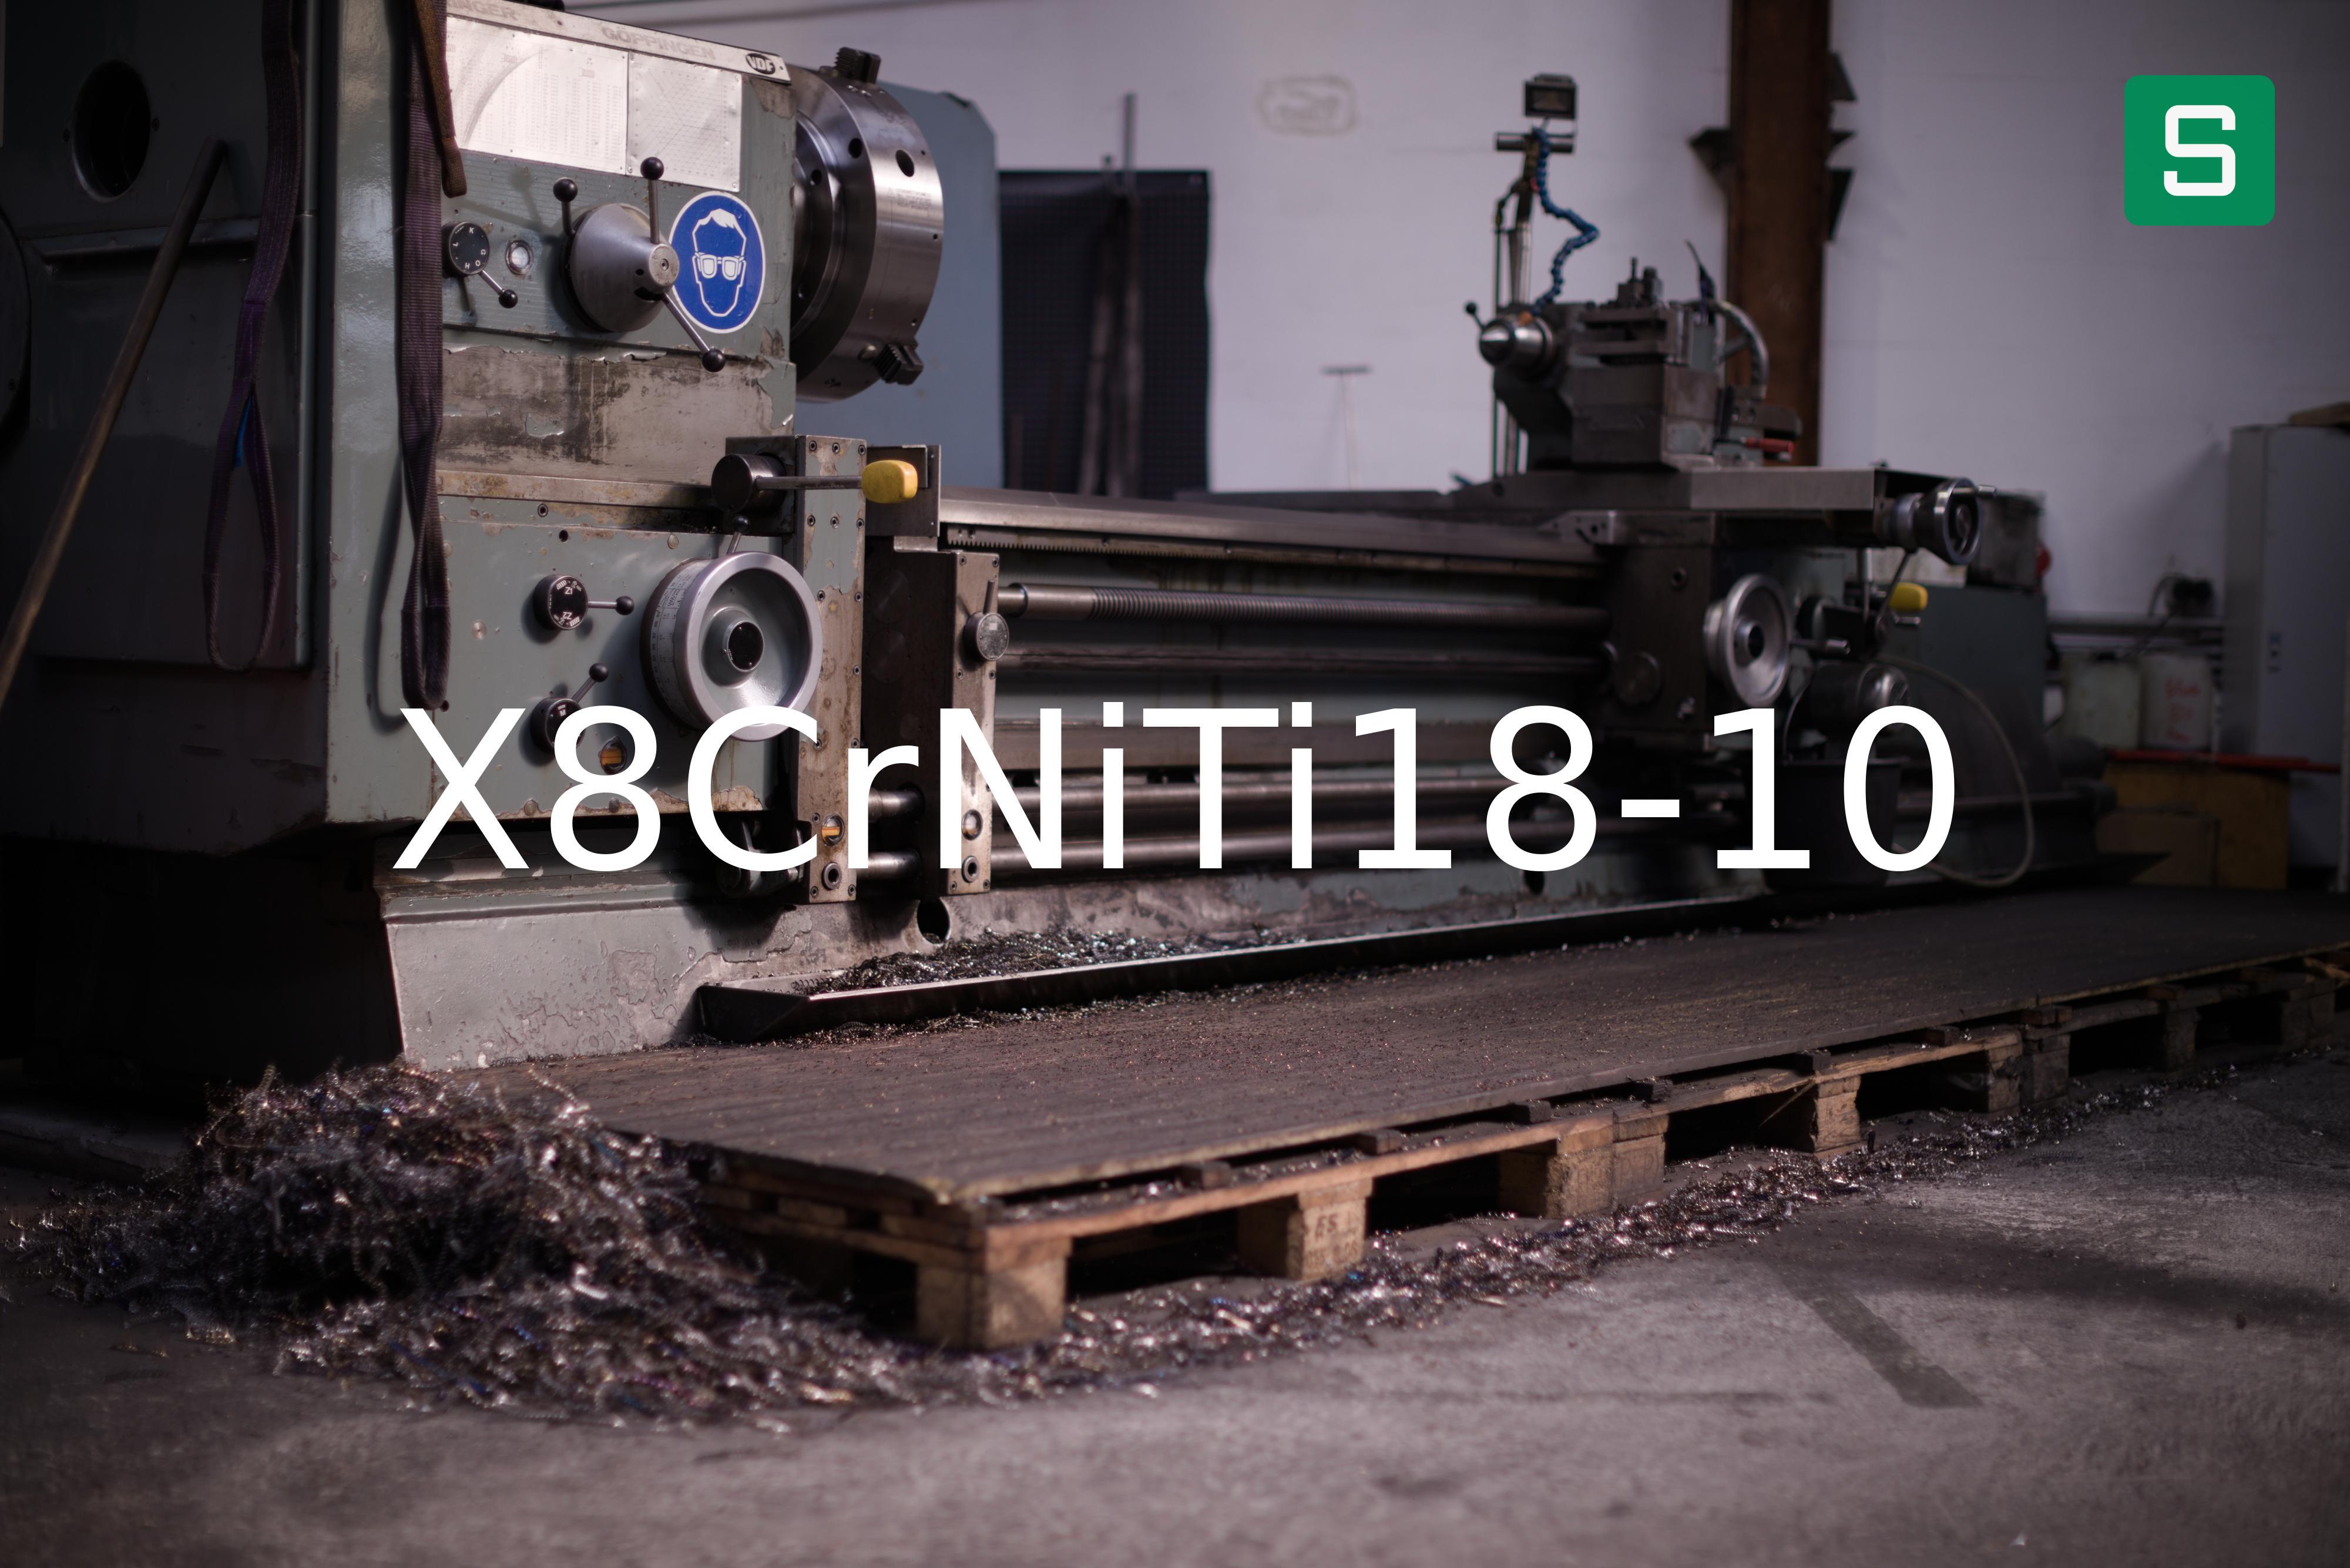 Steel Material: X8CrNiTi18-10